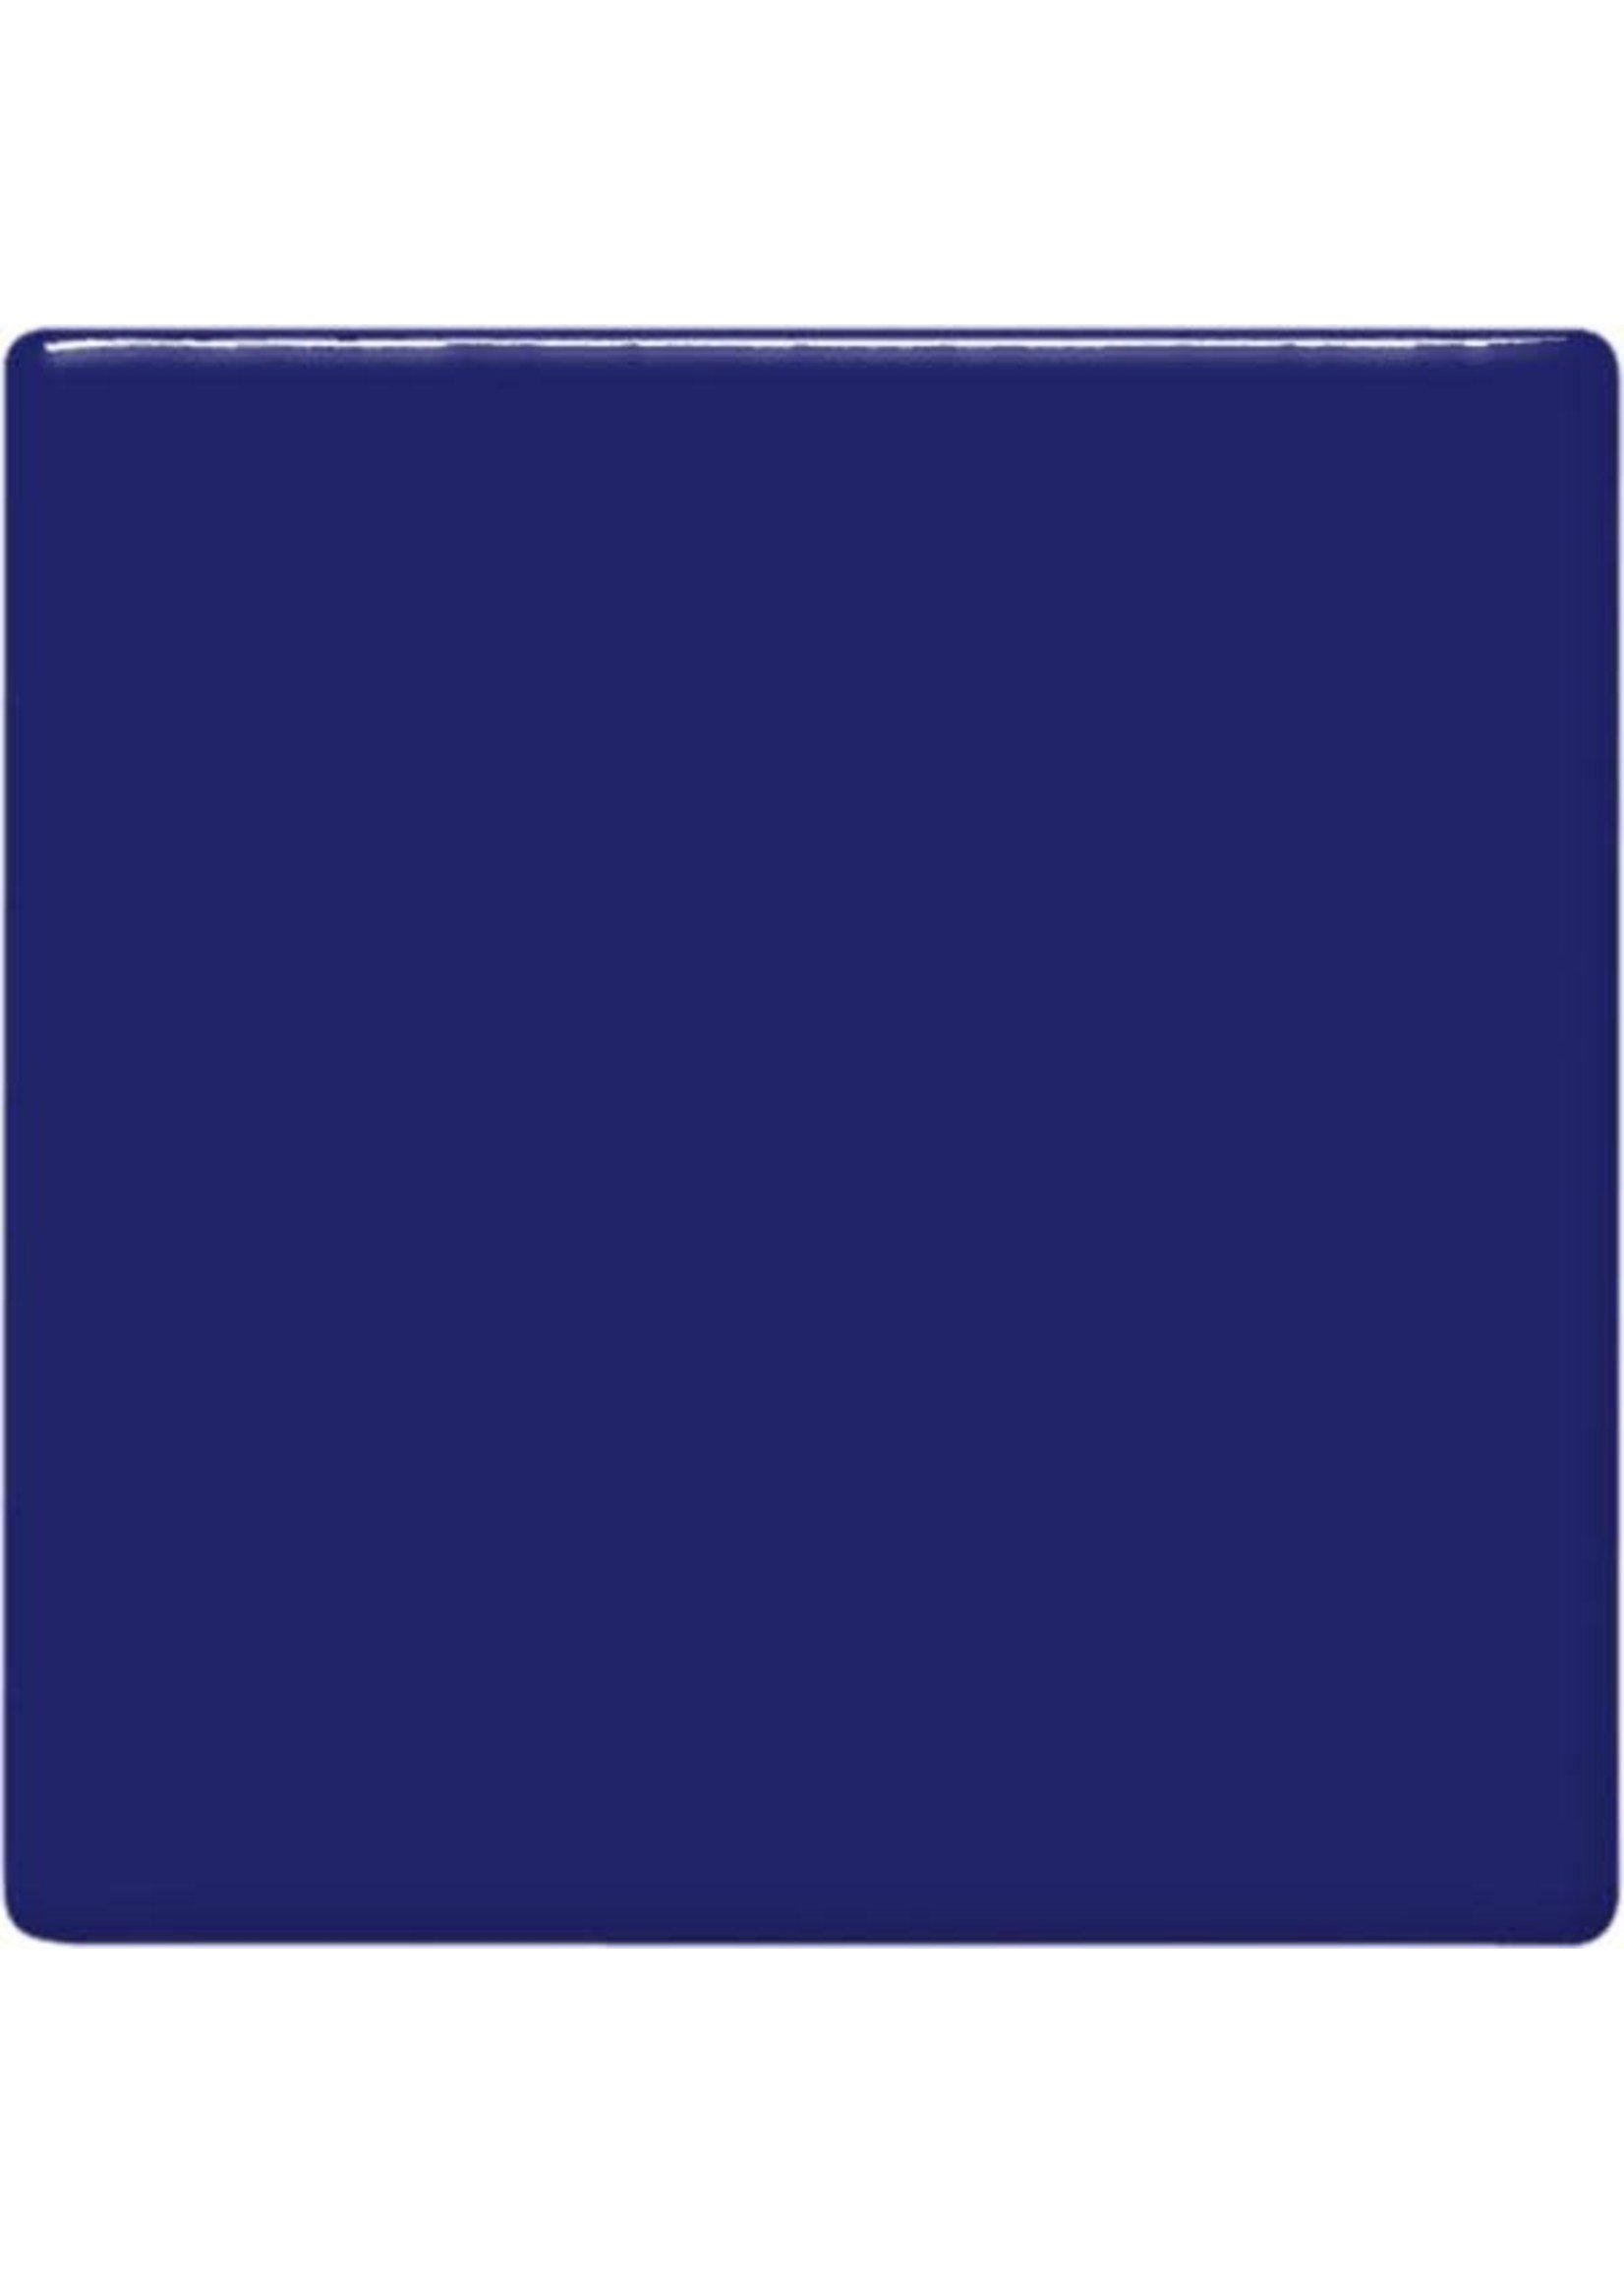 American Art Clay Co. MIDNIGHT BLUE TP-21 Pint